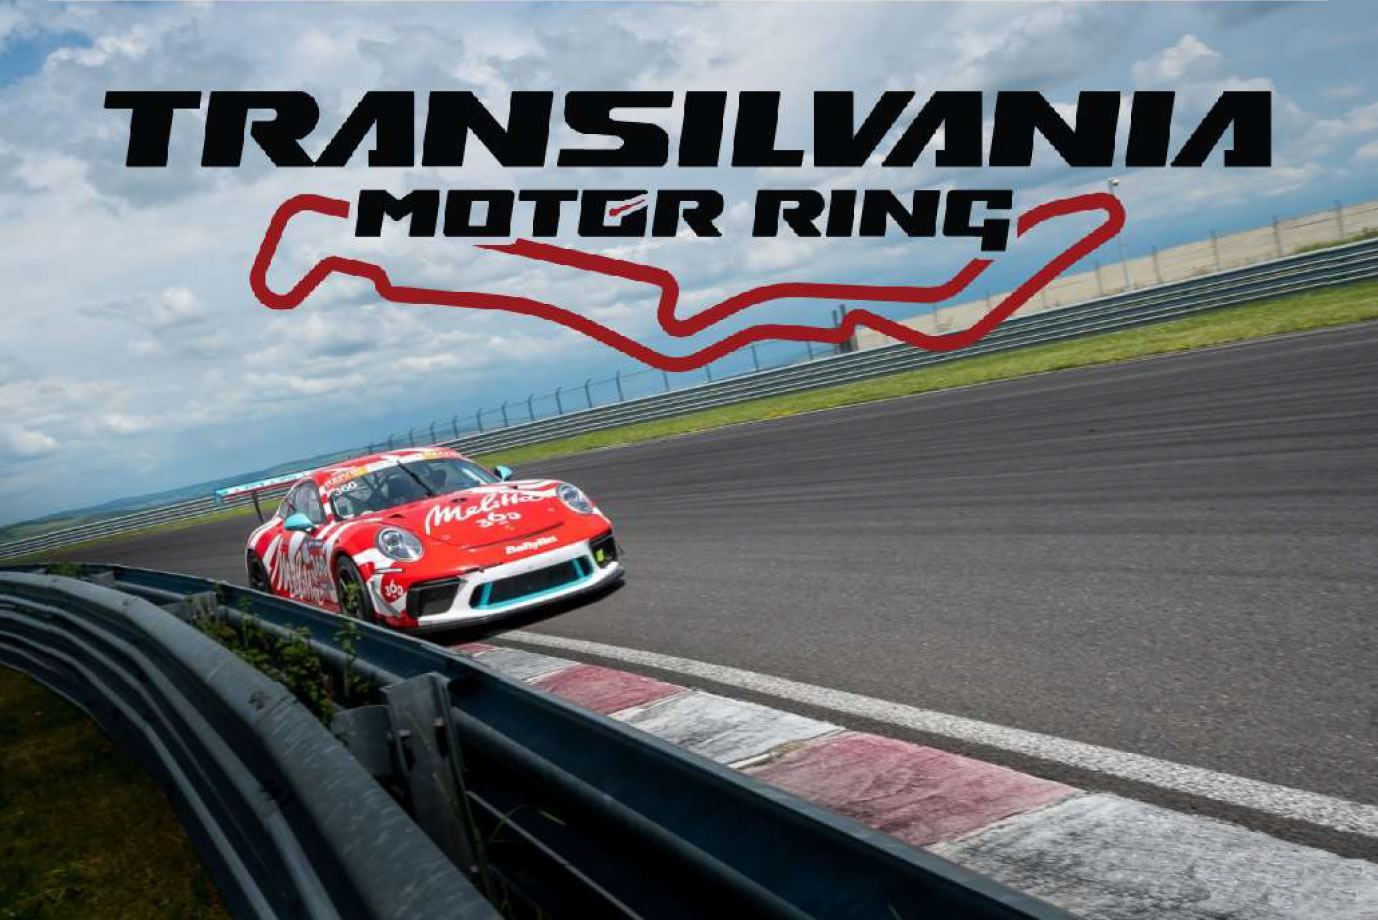 Transilvania Motor Ring